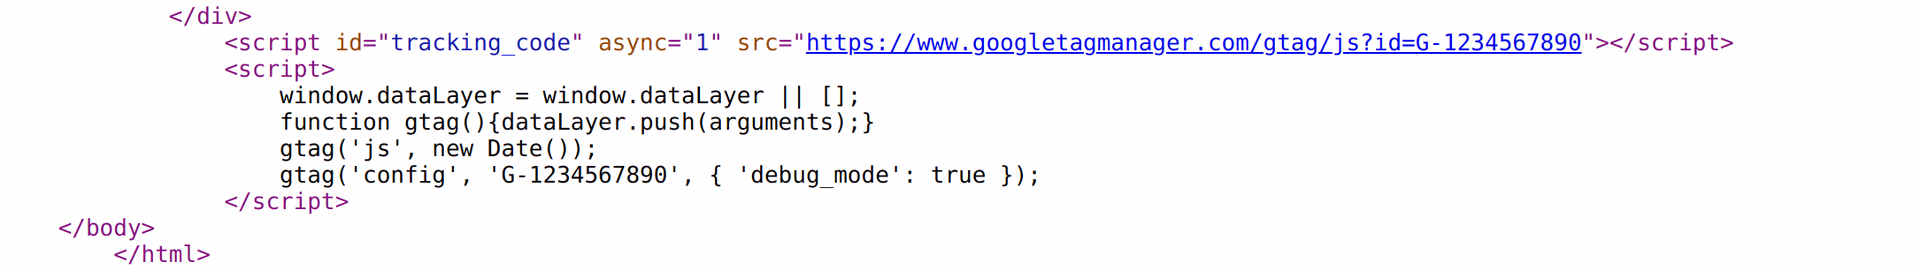 Odoo 17.0 Google Analytics 4 Global Site Tag (gtag.js) global site tag script code